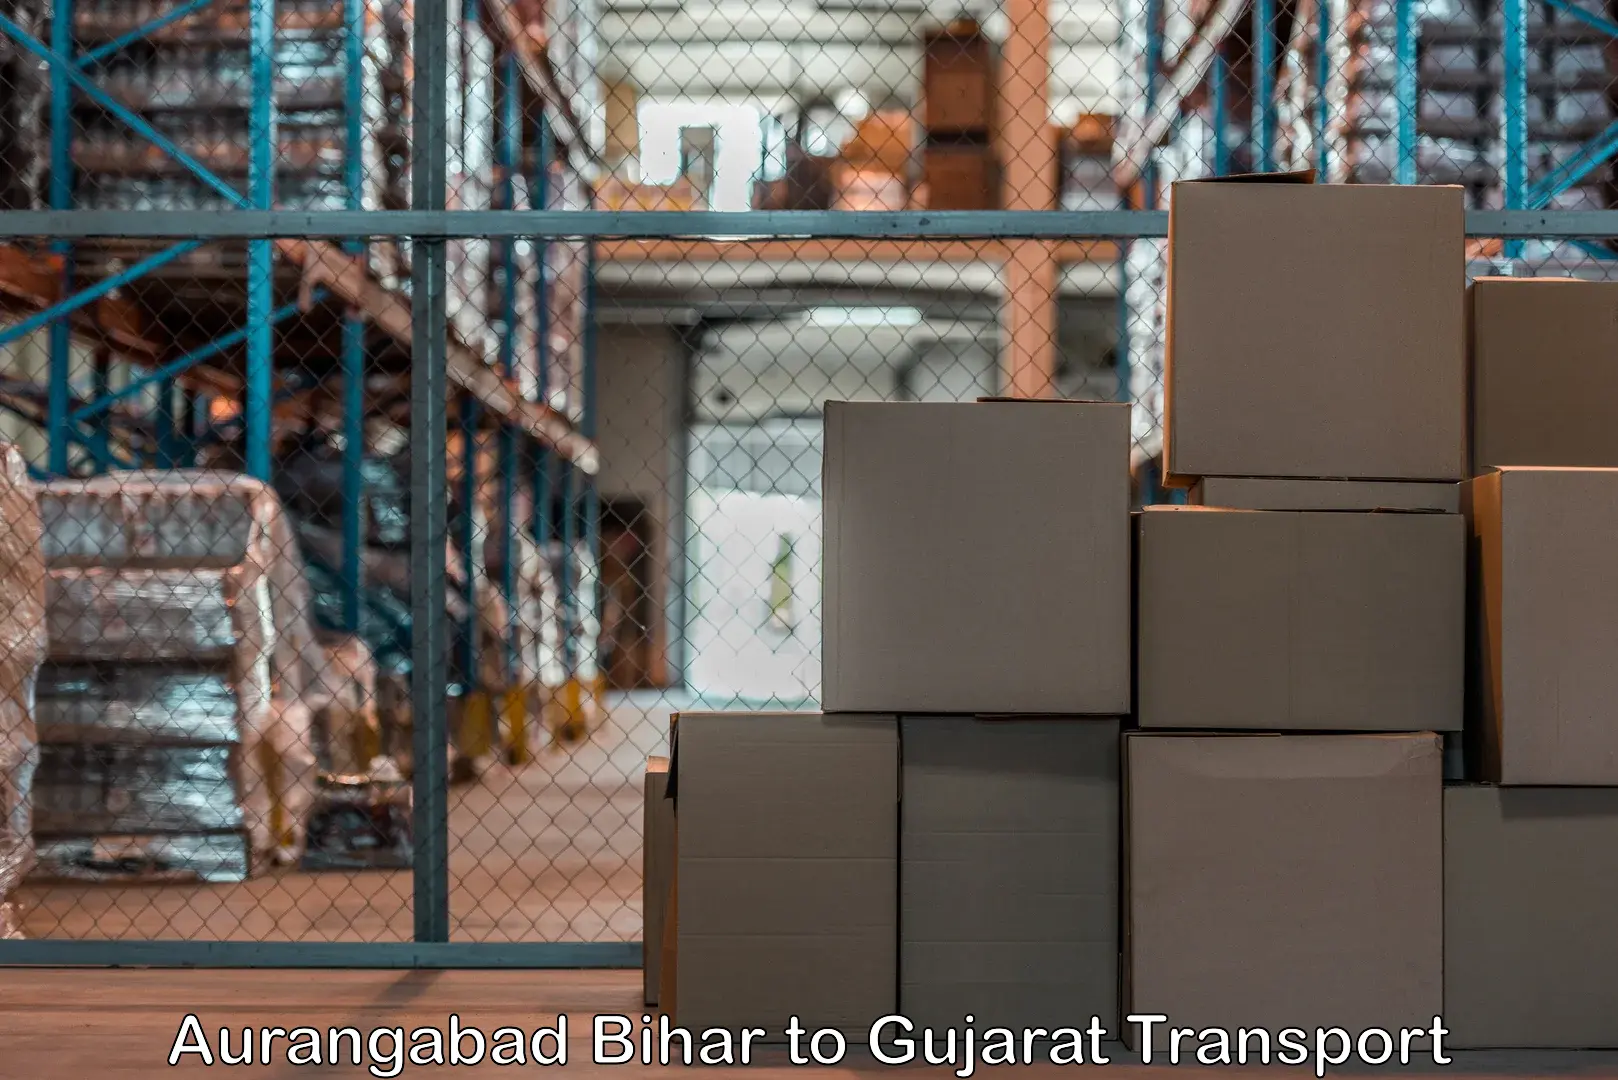 Package delivery services Aurangabad Bihar to Gandhidham